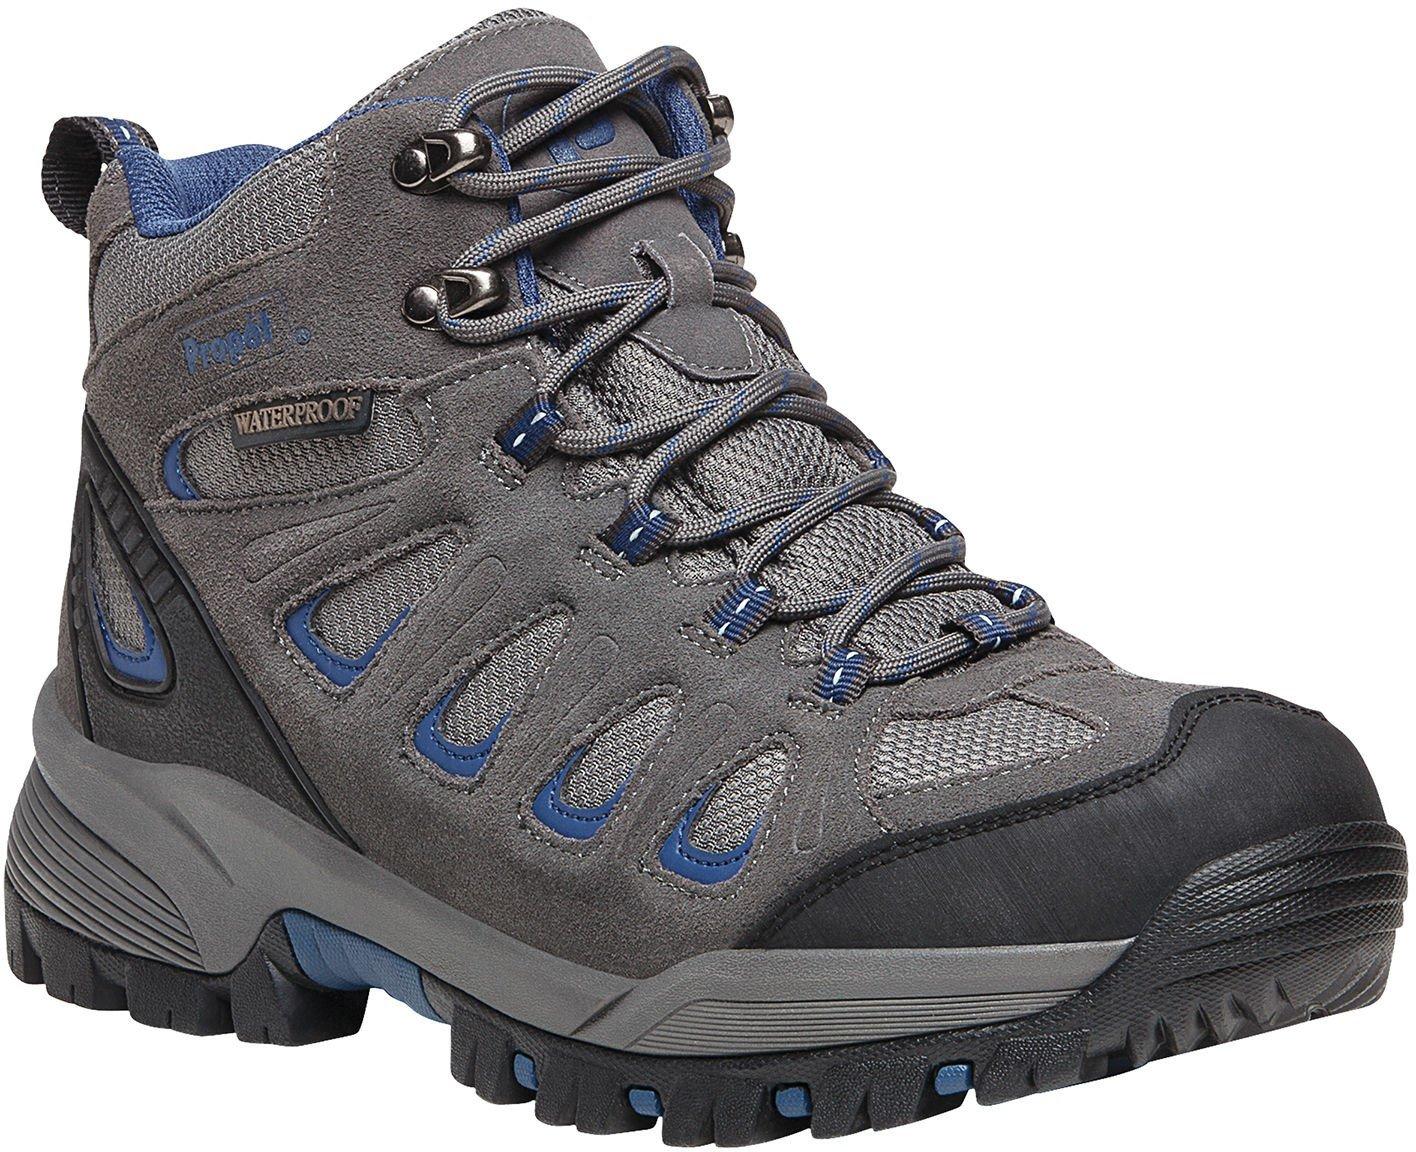 USA Mens RidgeWalker Hiking Boots